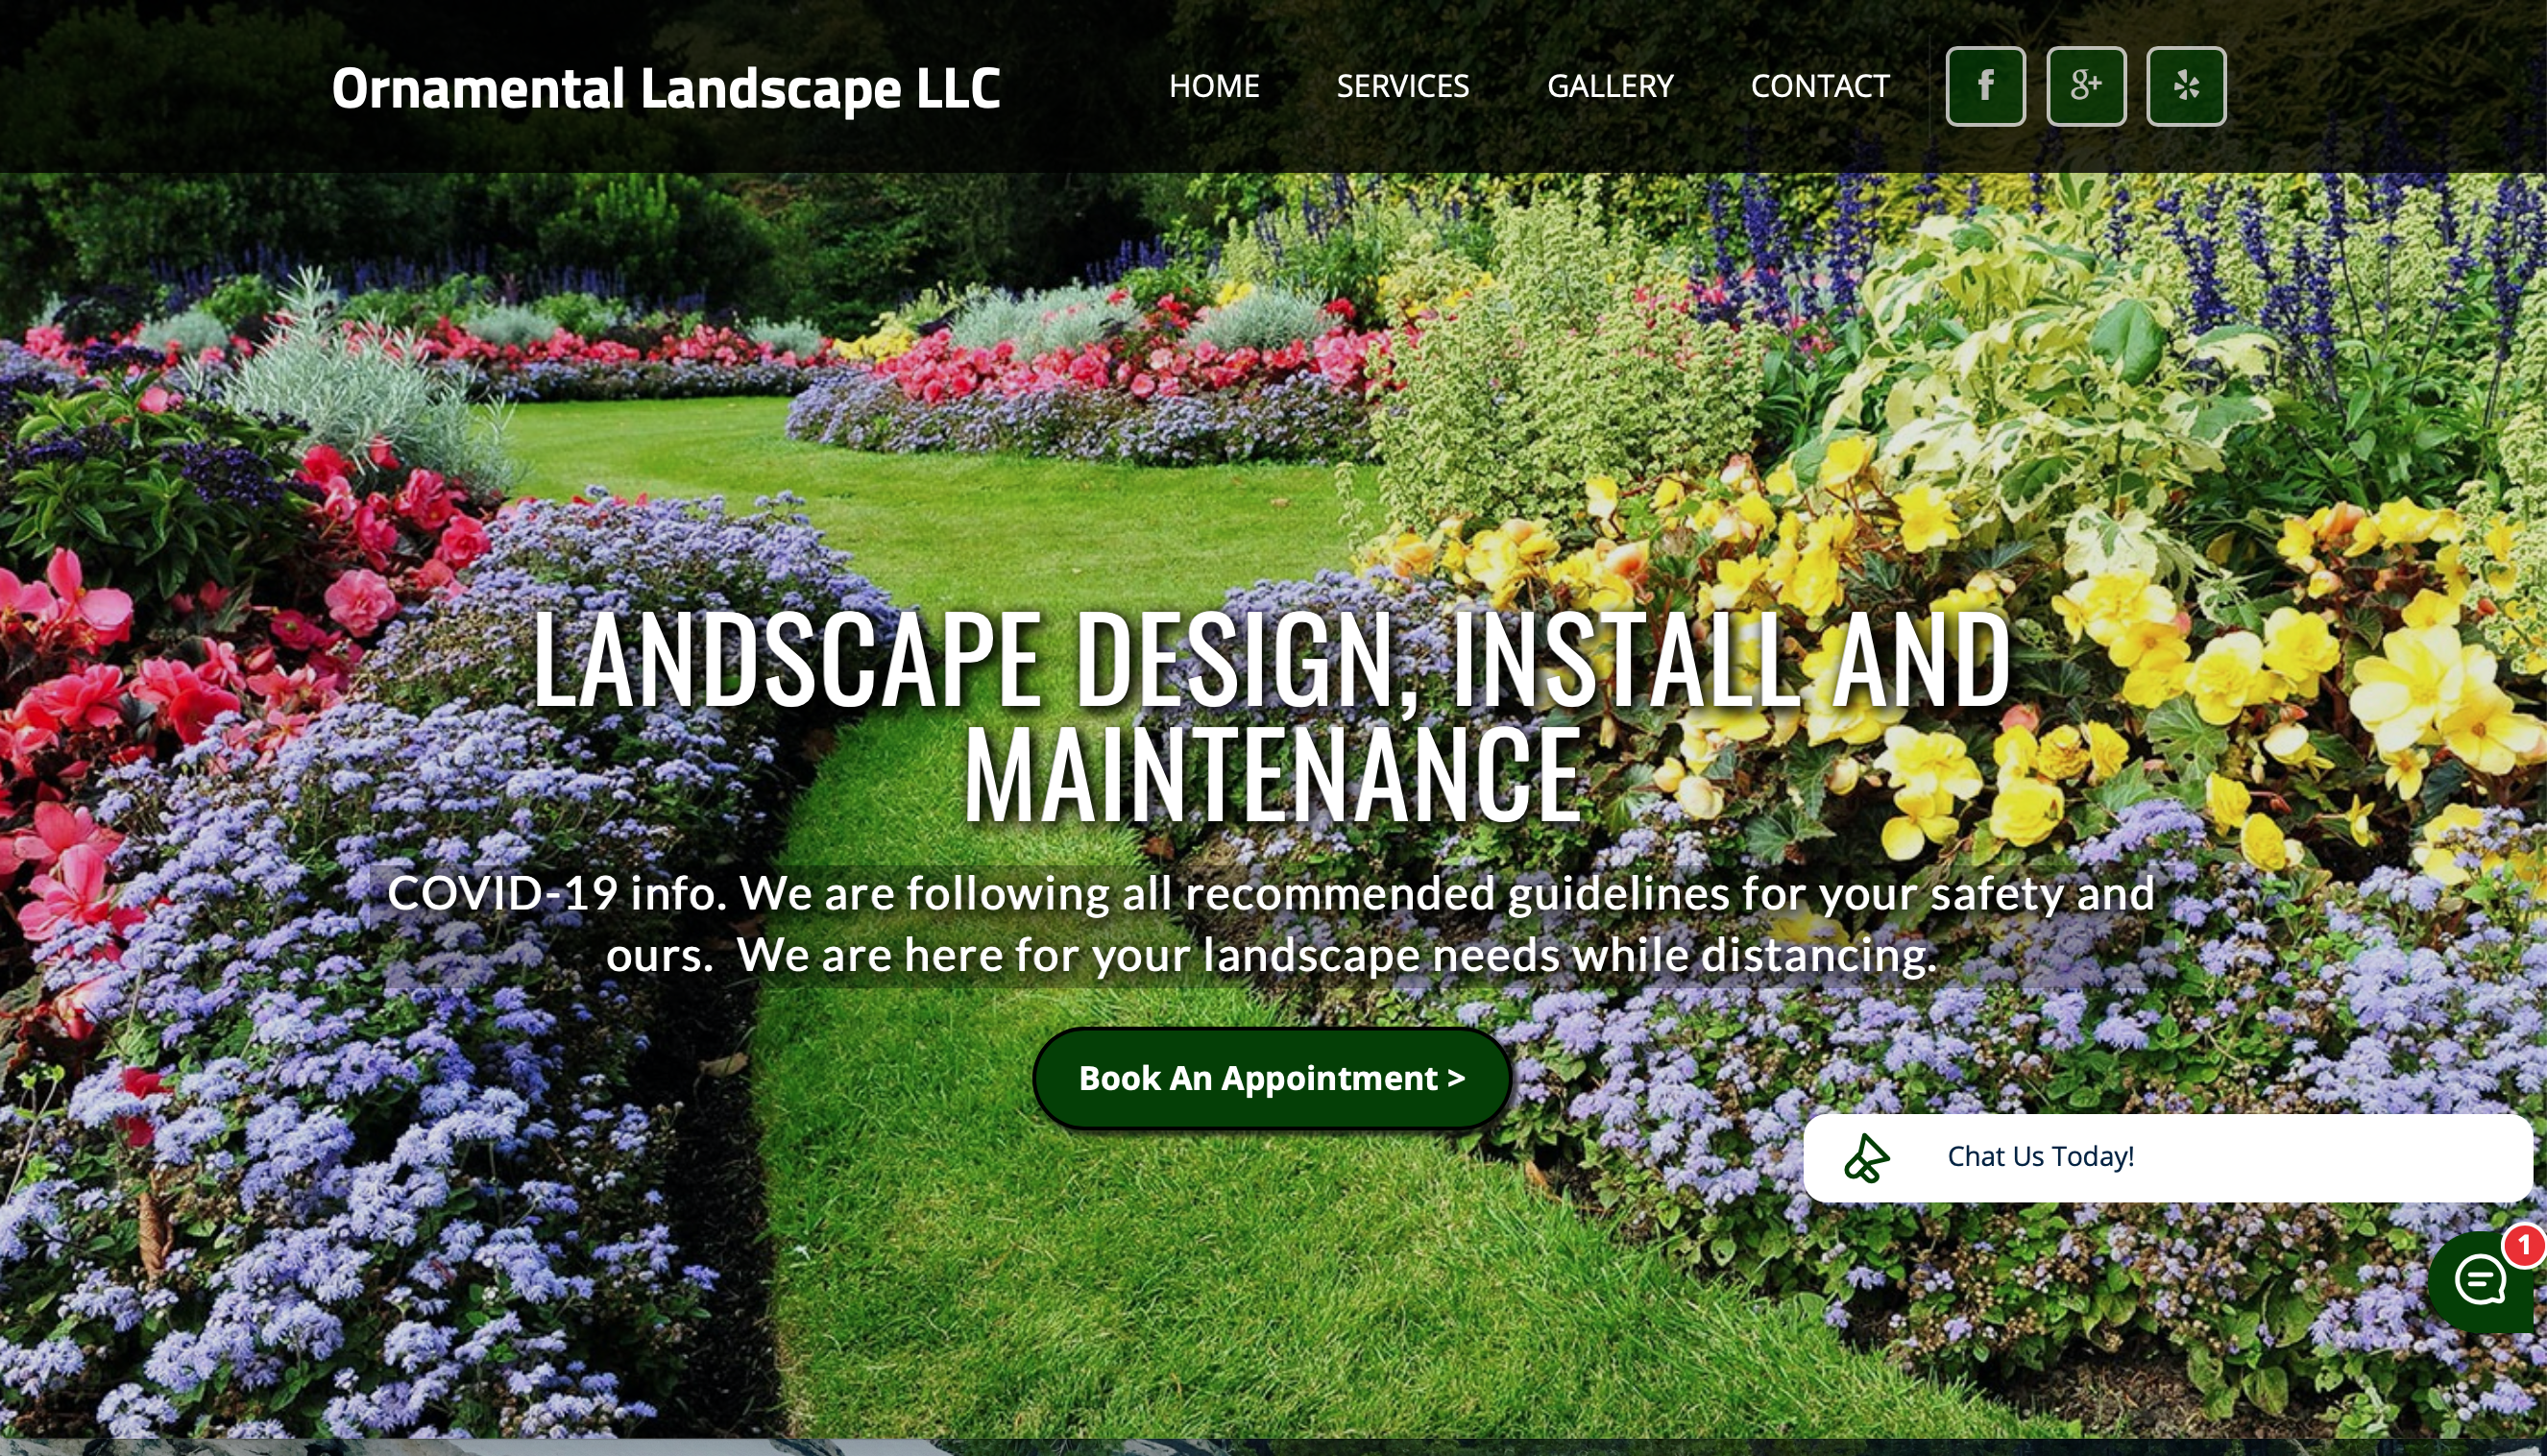 Ornamental Landscape LLC